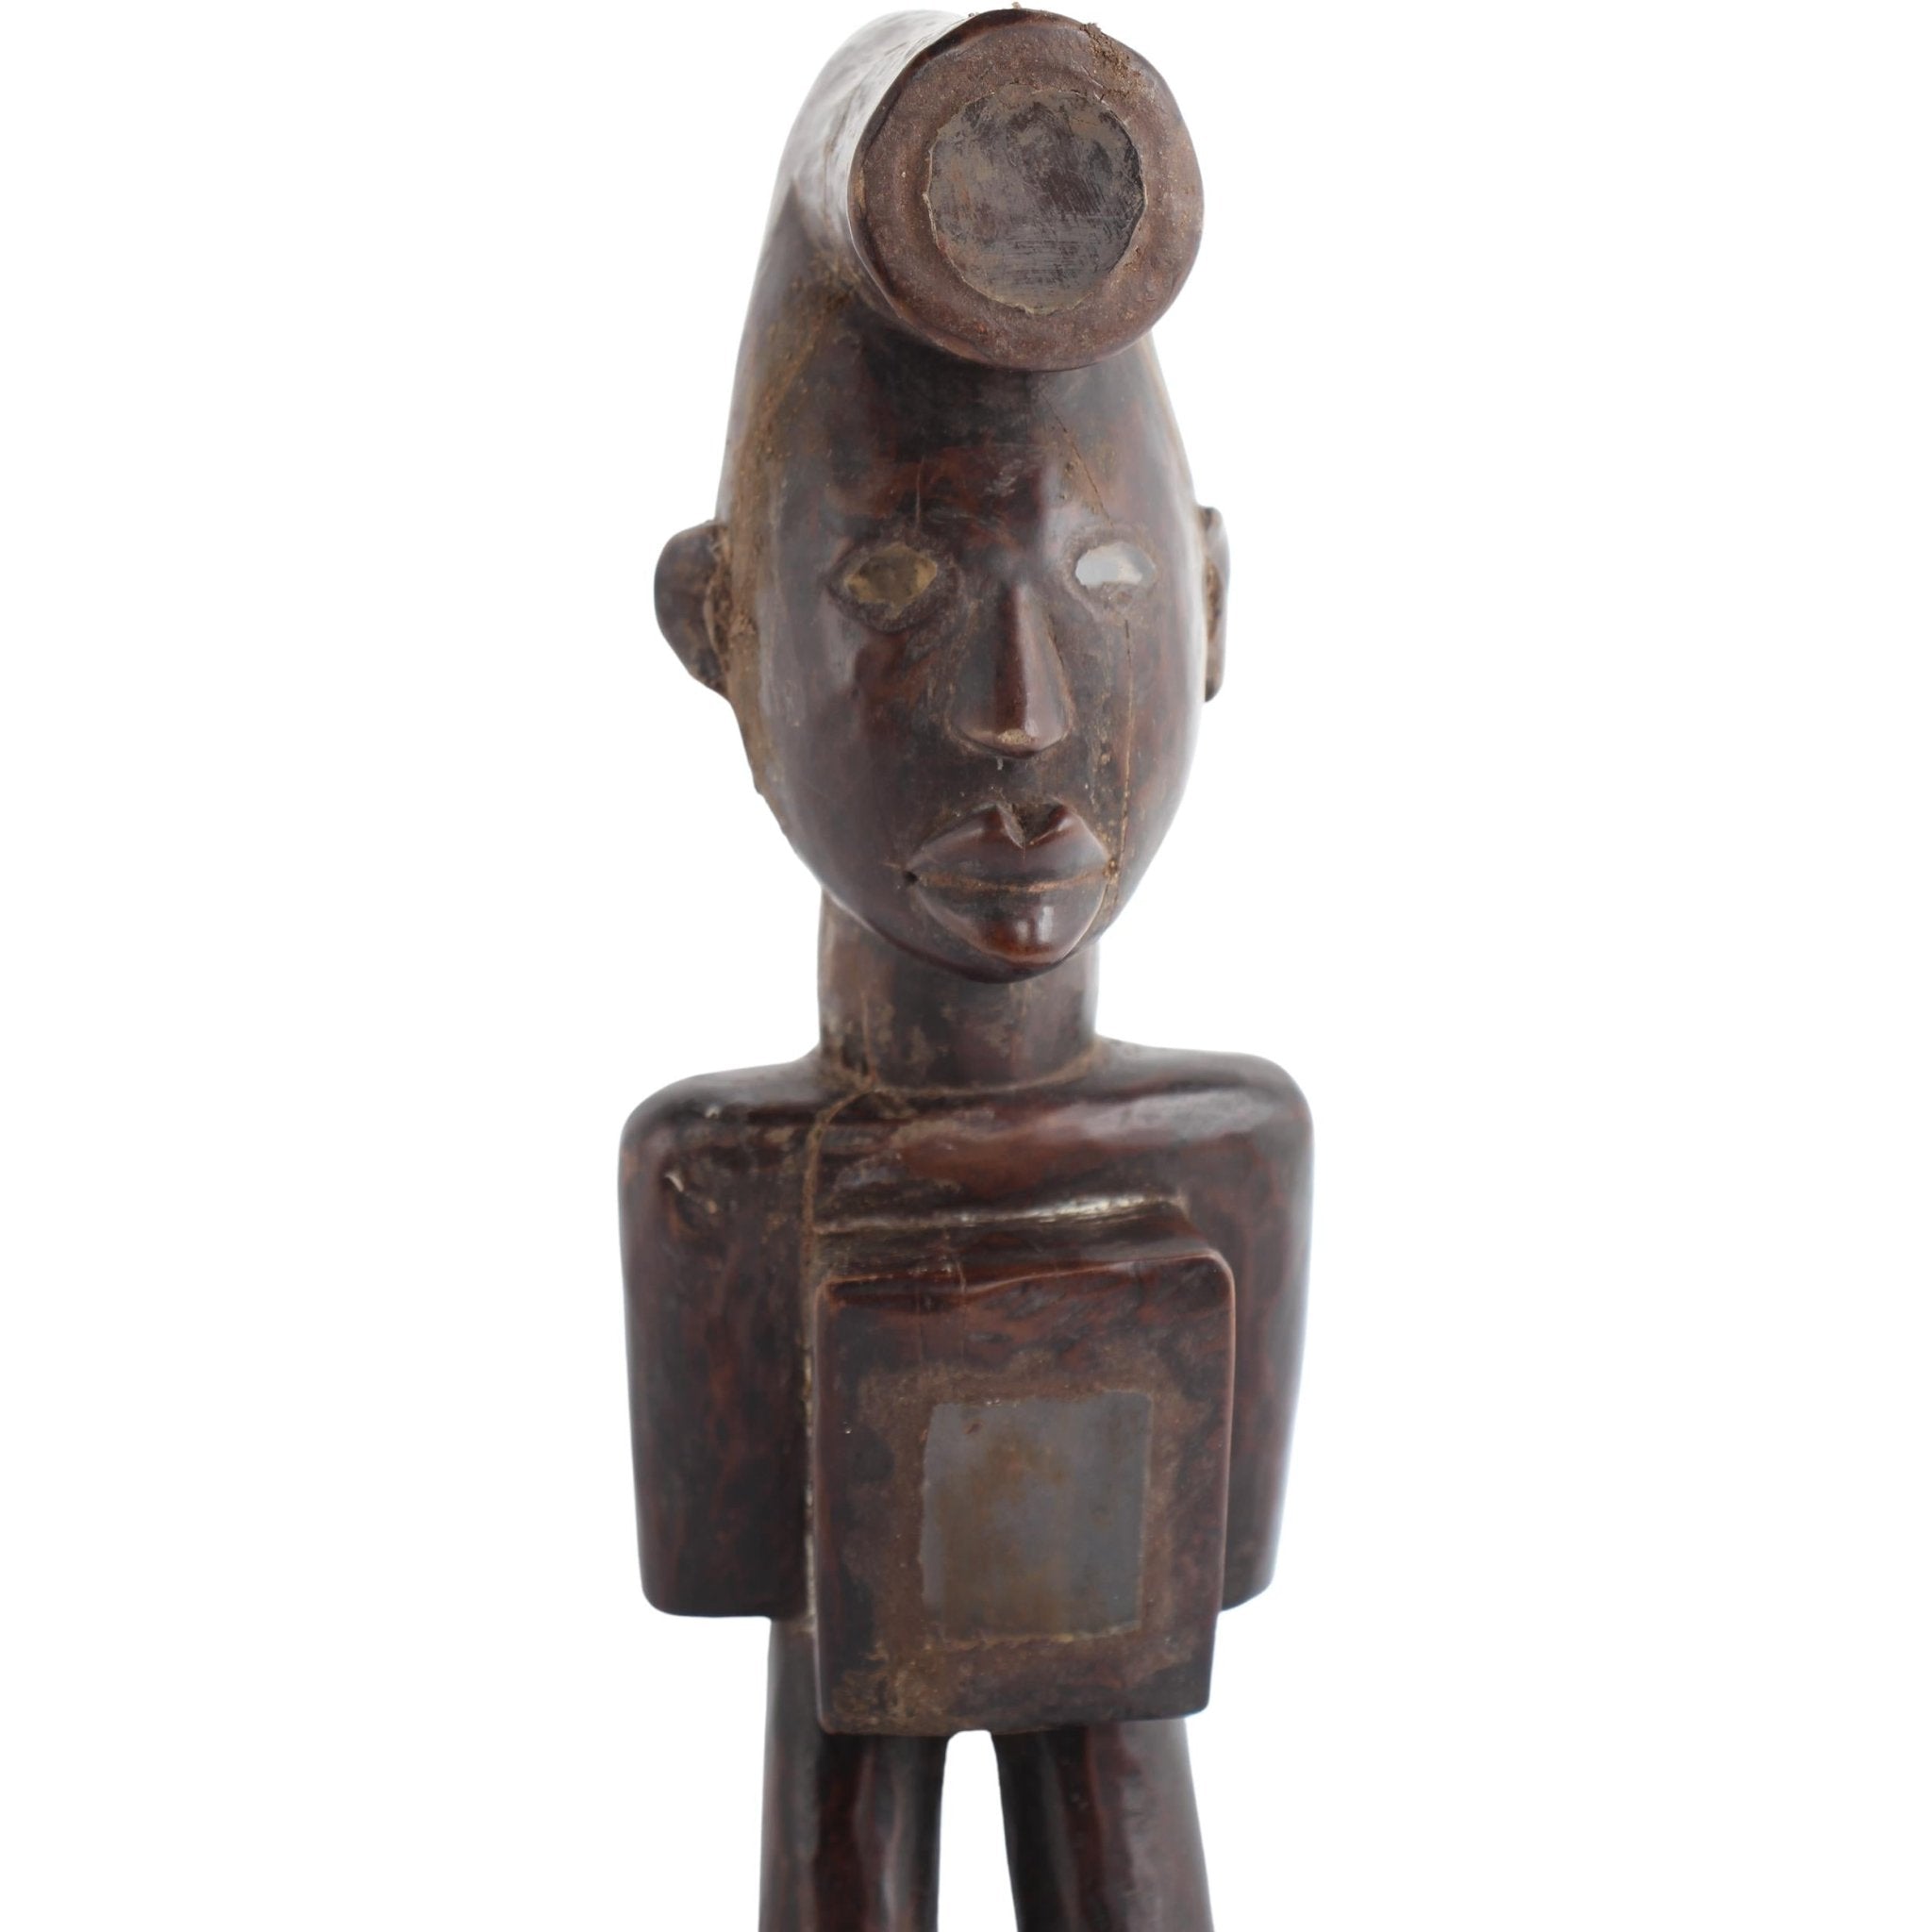 Basonge/Songye Tribe Figurine ~13.0" Tall - African Angel Art - Figurine